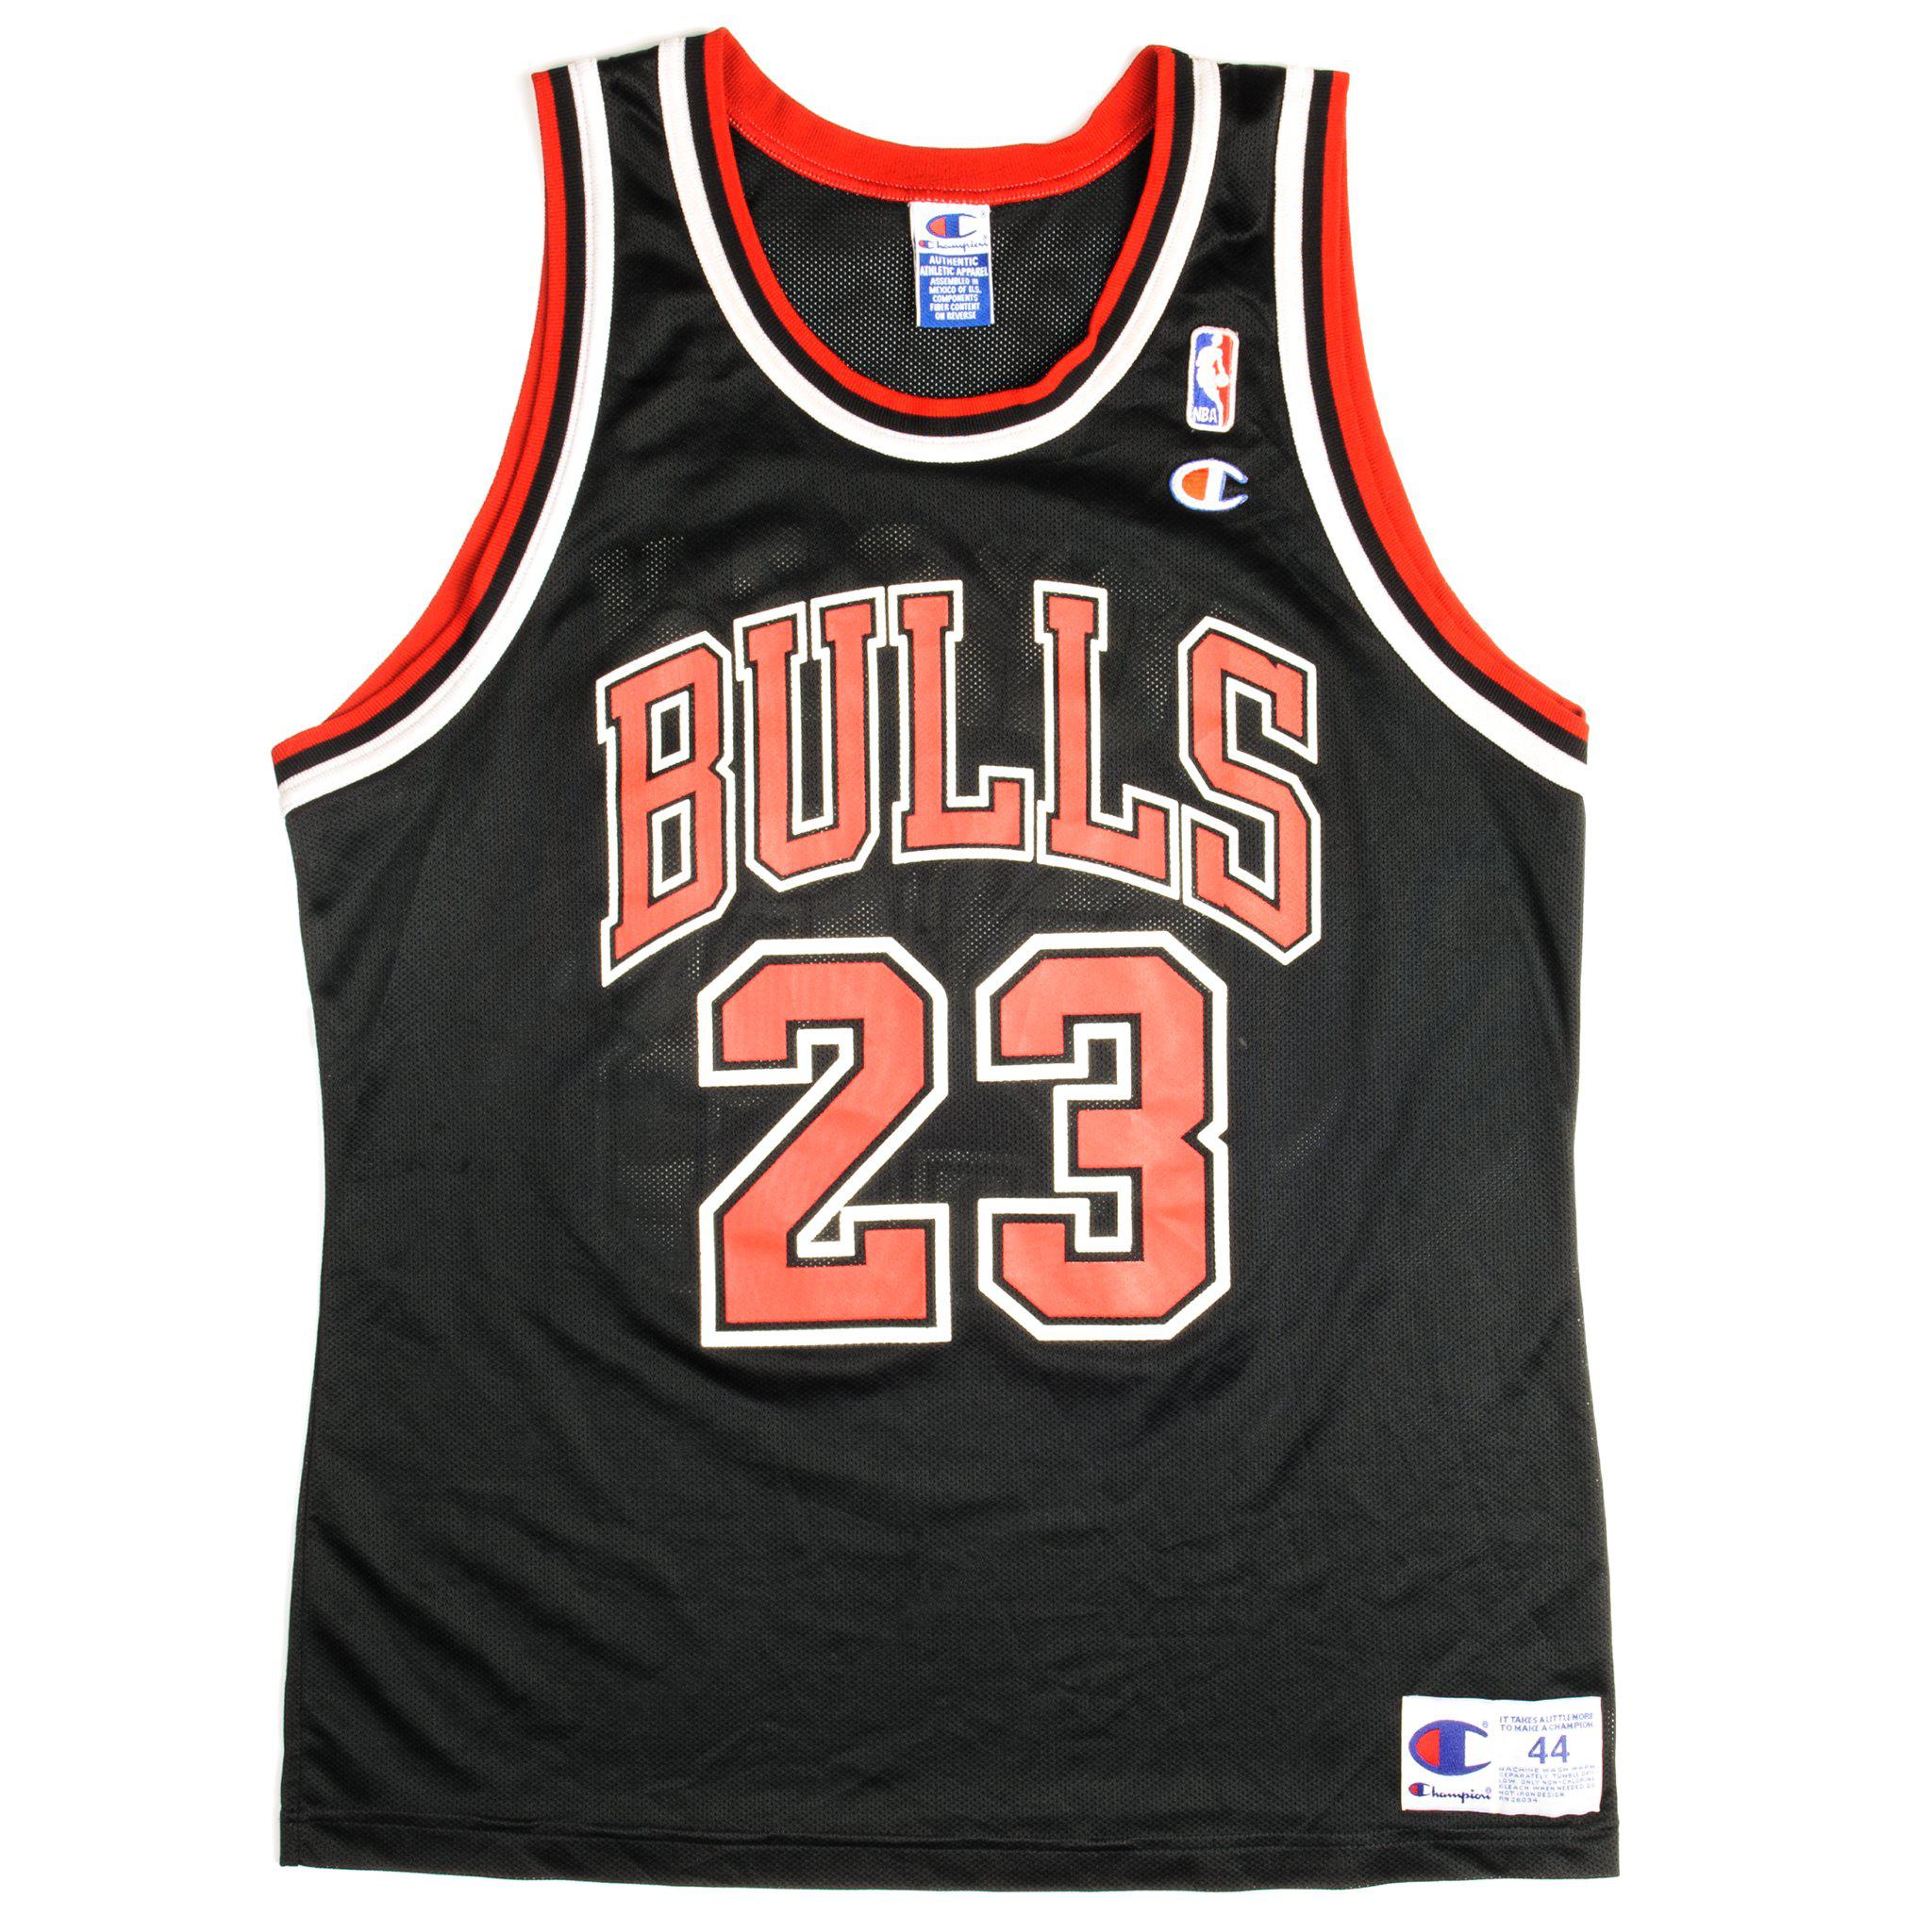 Nba uniforms, Chicago bulls, Sports jersey design